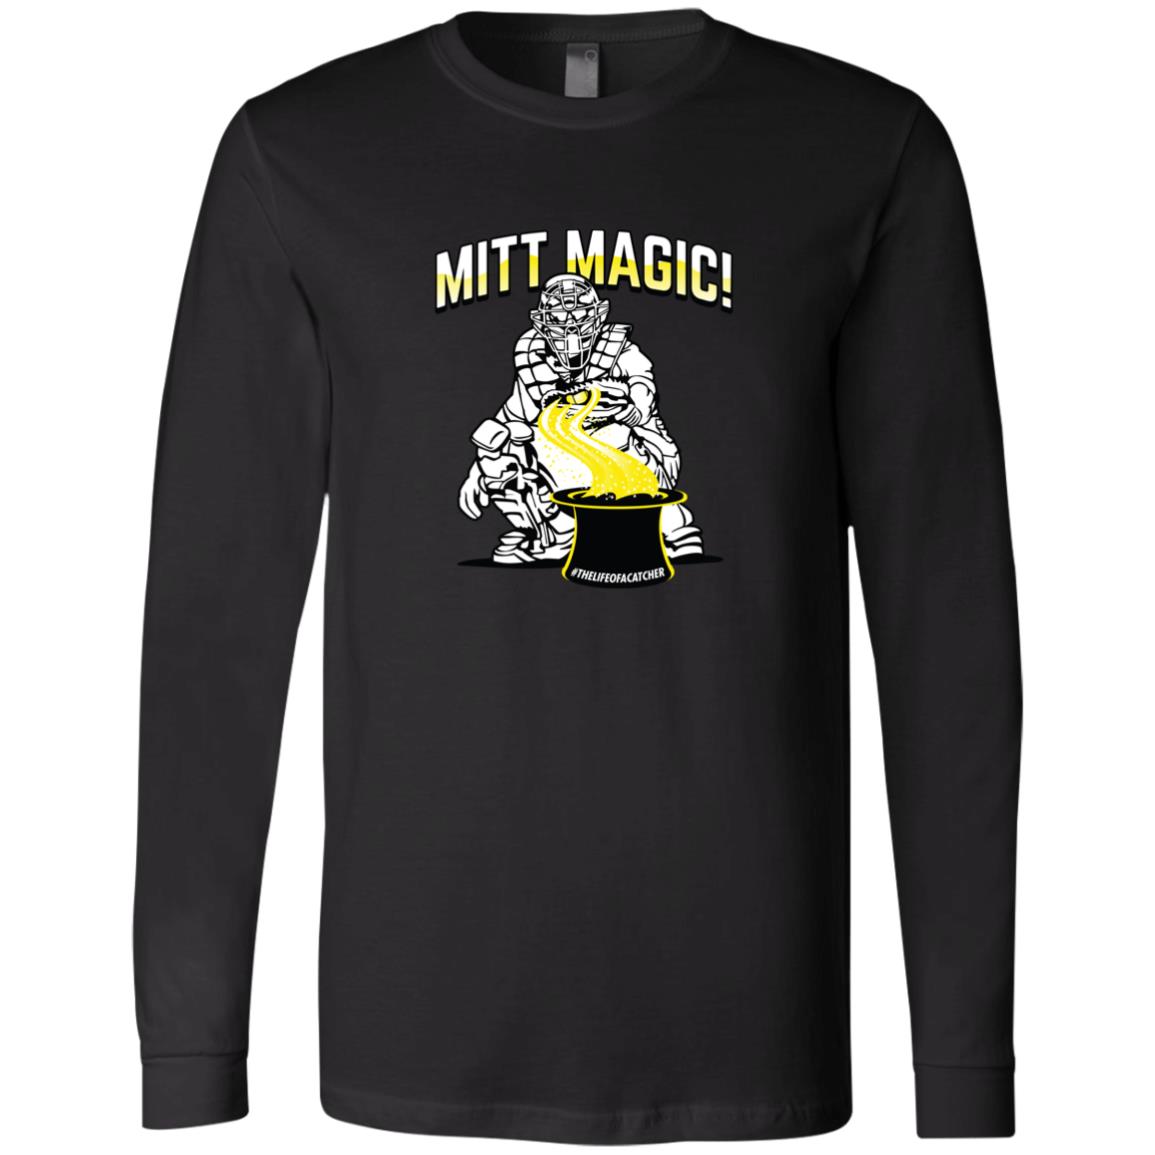 The Catching Guy Mitt Magic Men's Jersey Tee black